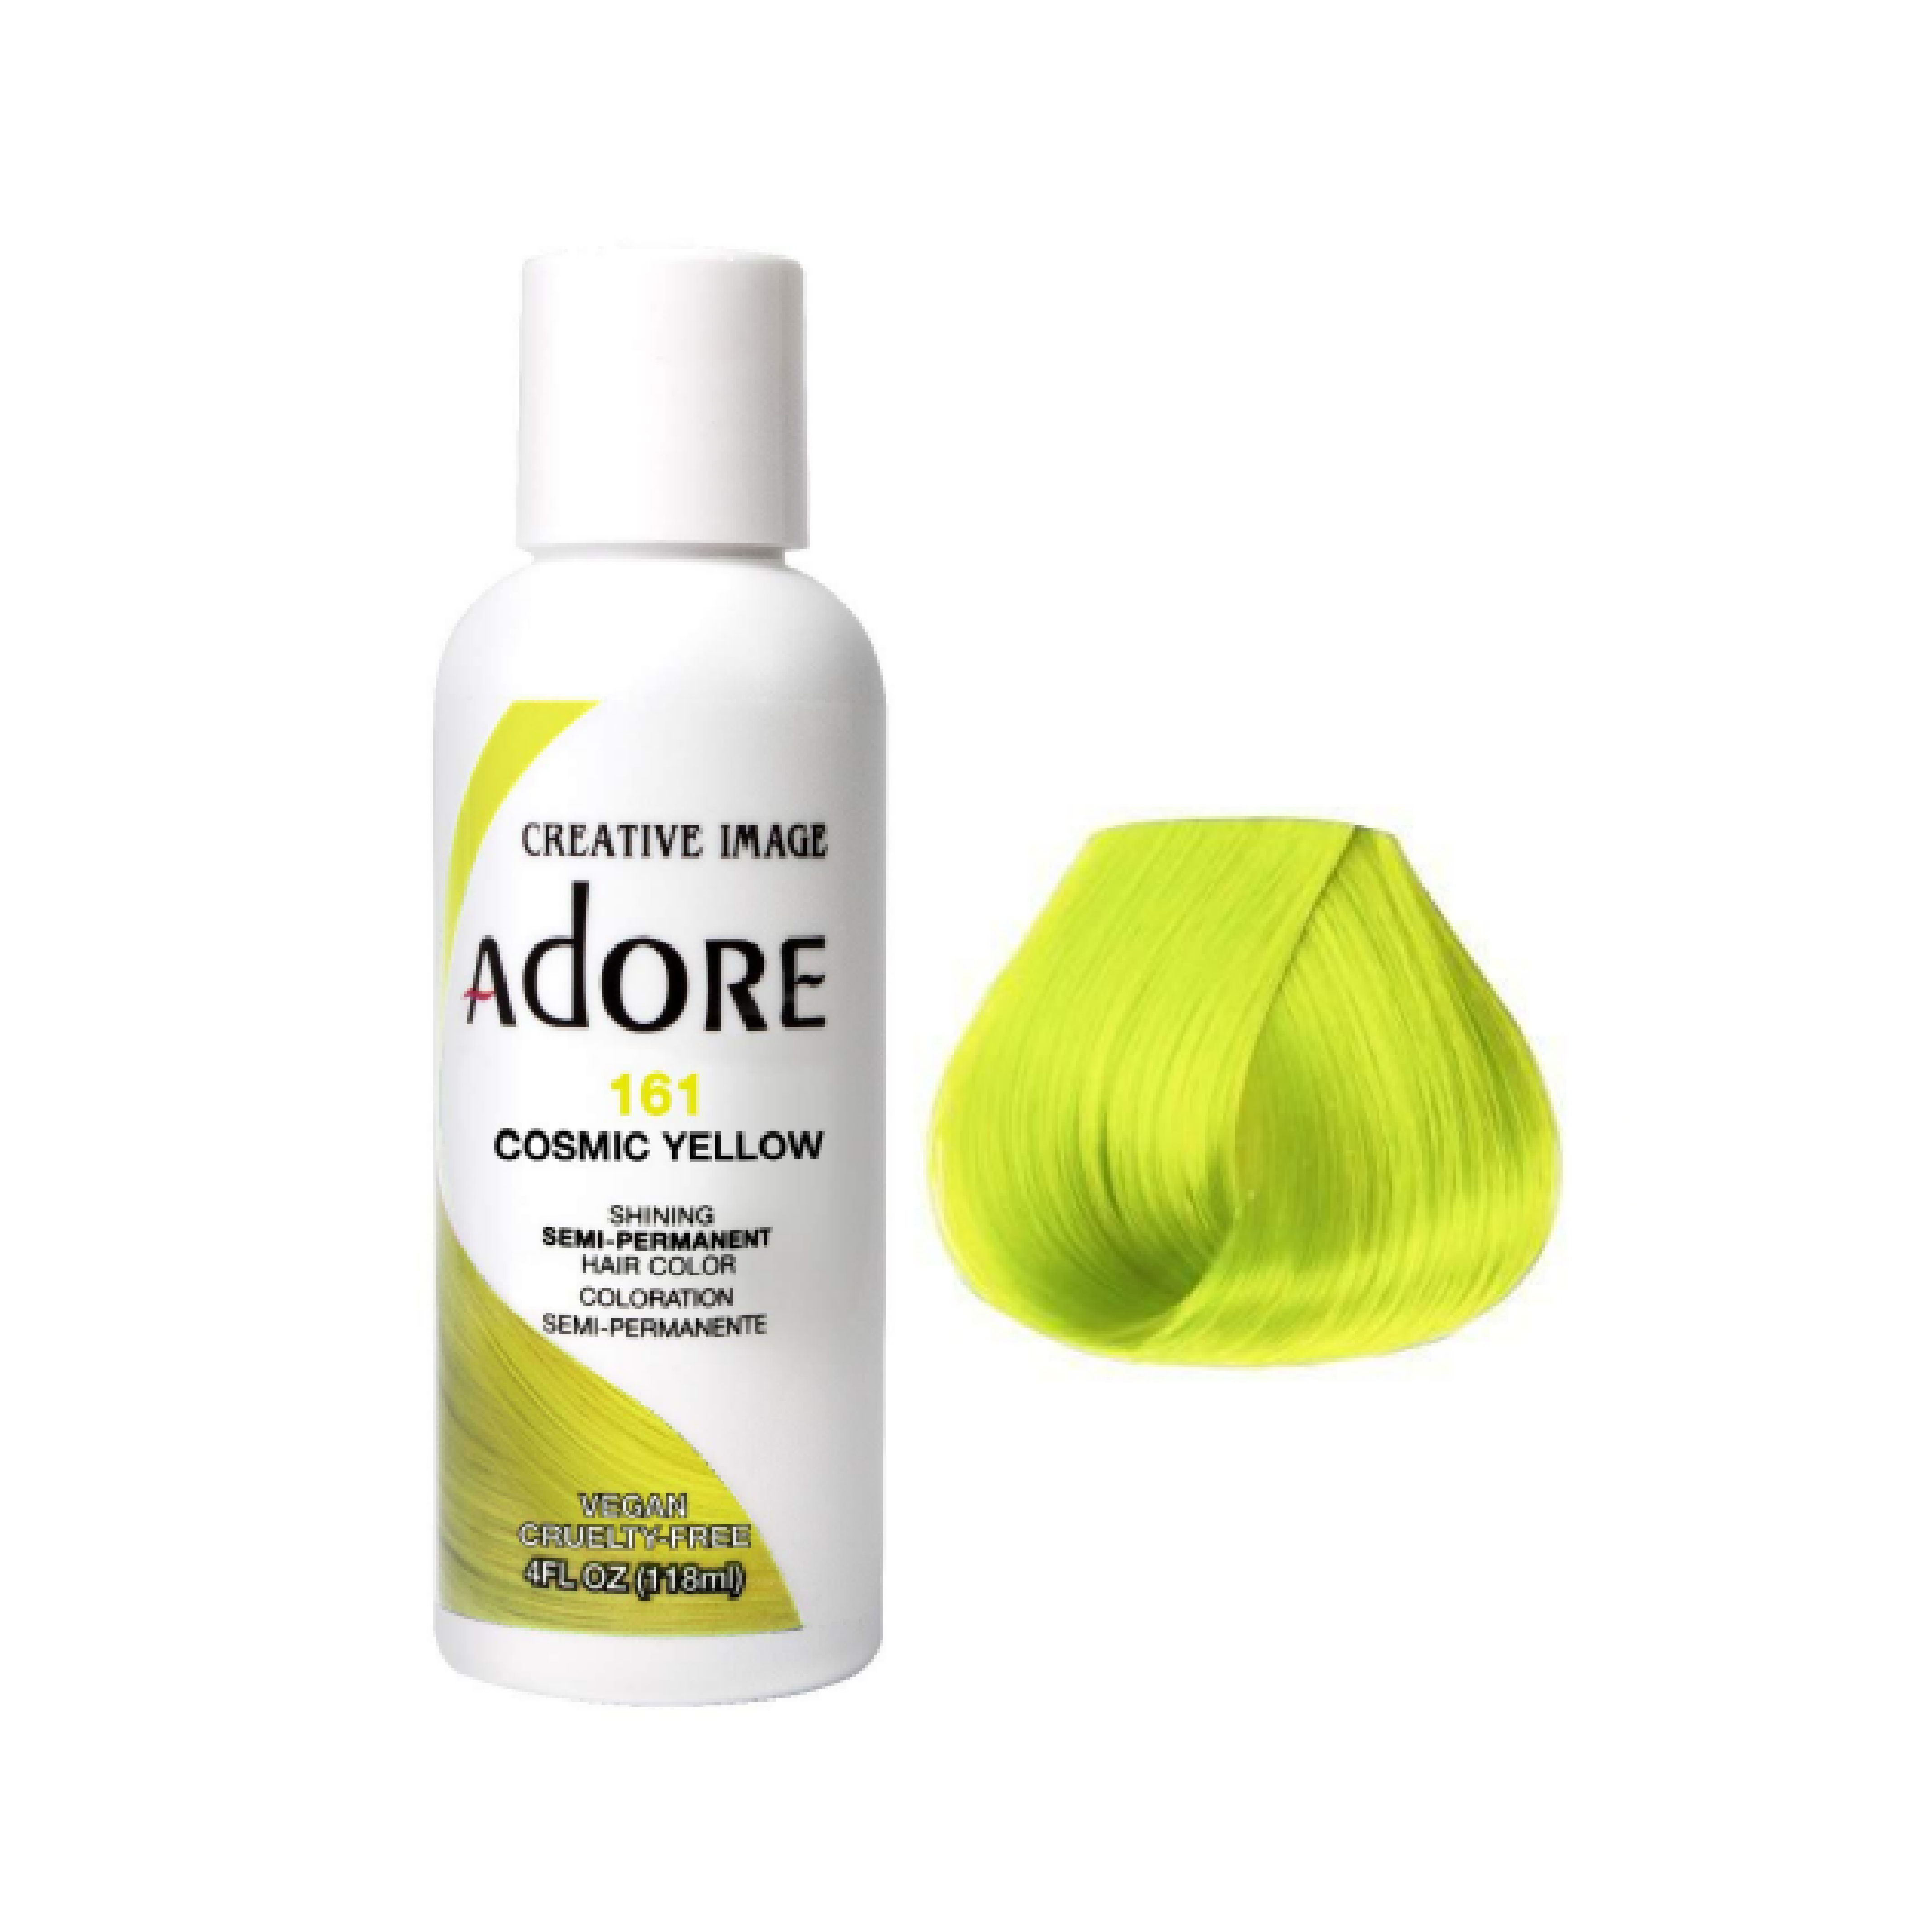 Adore Semi Permanent Cosmic Yellow Hair Colour 161 - 118ml